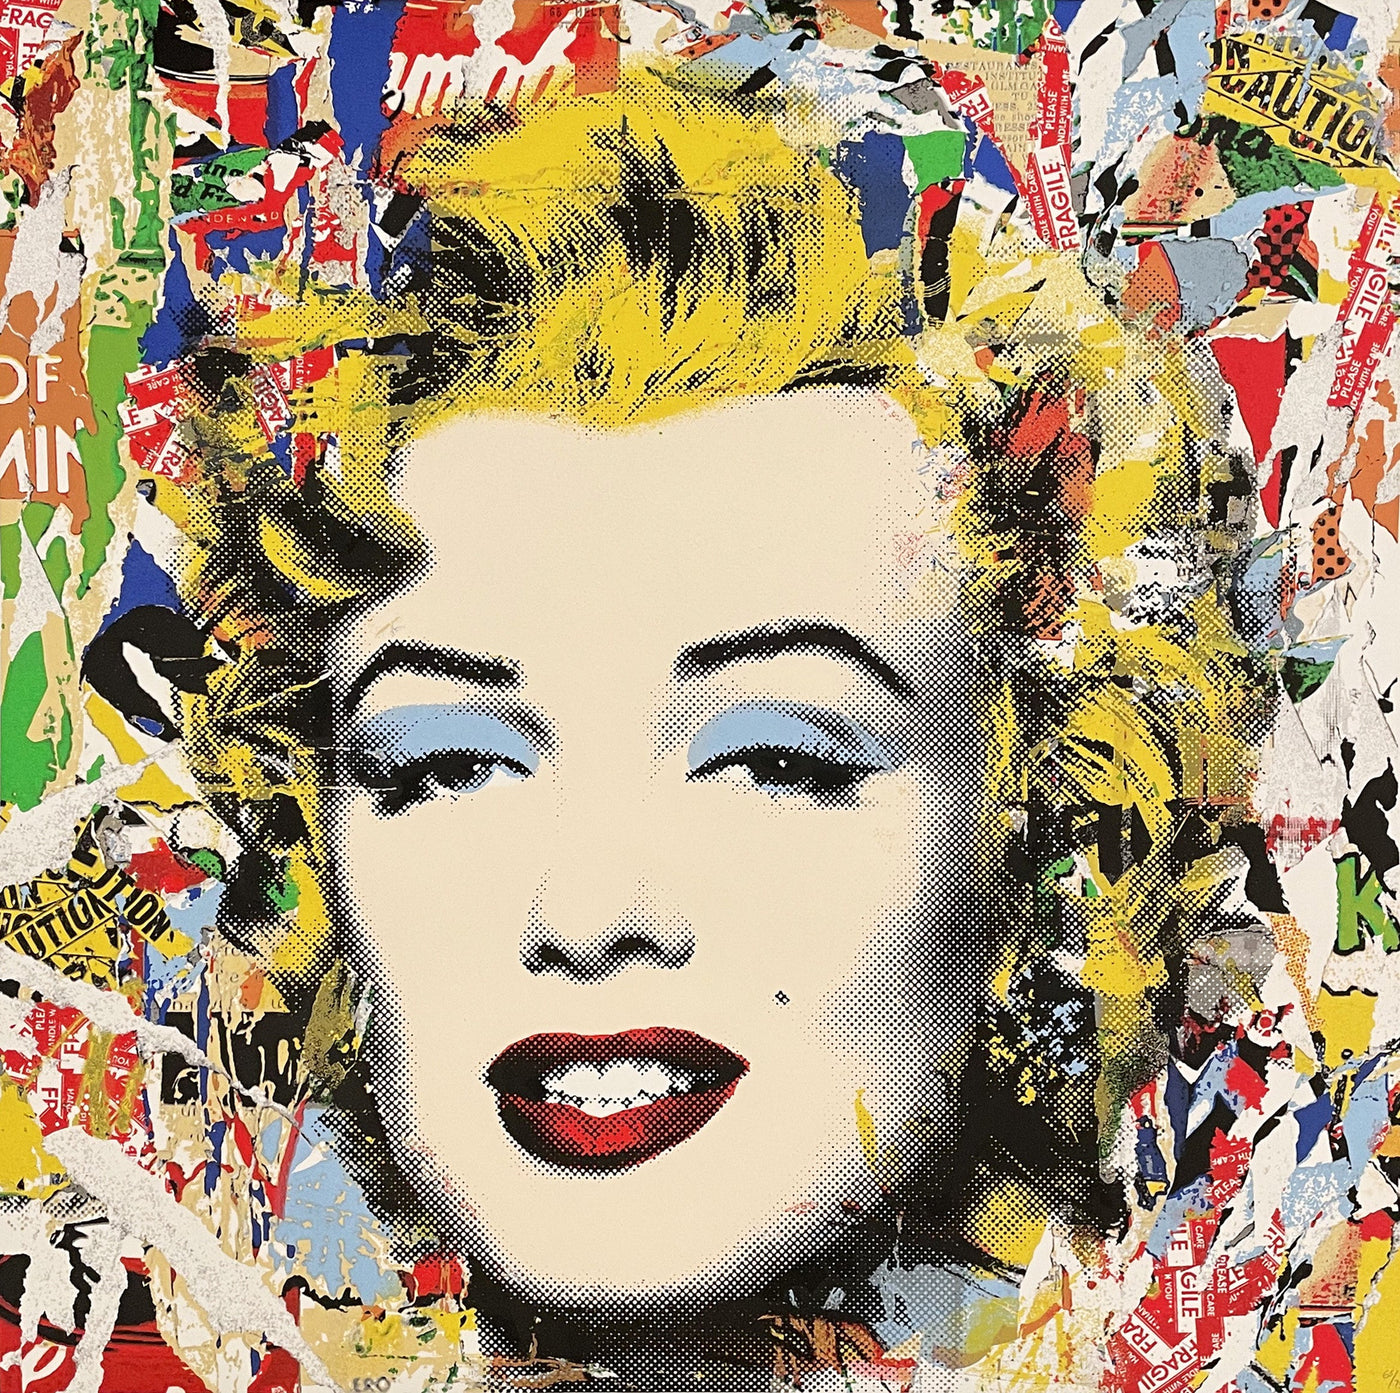 Mr. Brainwash Marilyn Monroe POPfolio Image 3 2022